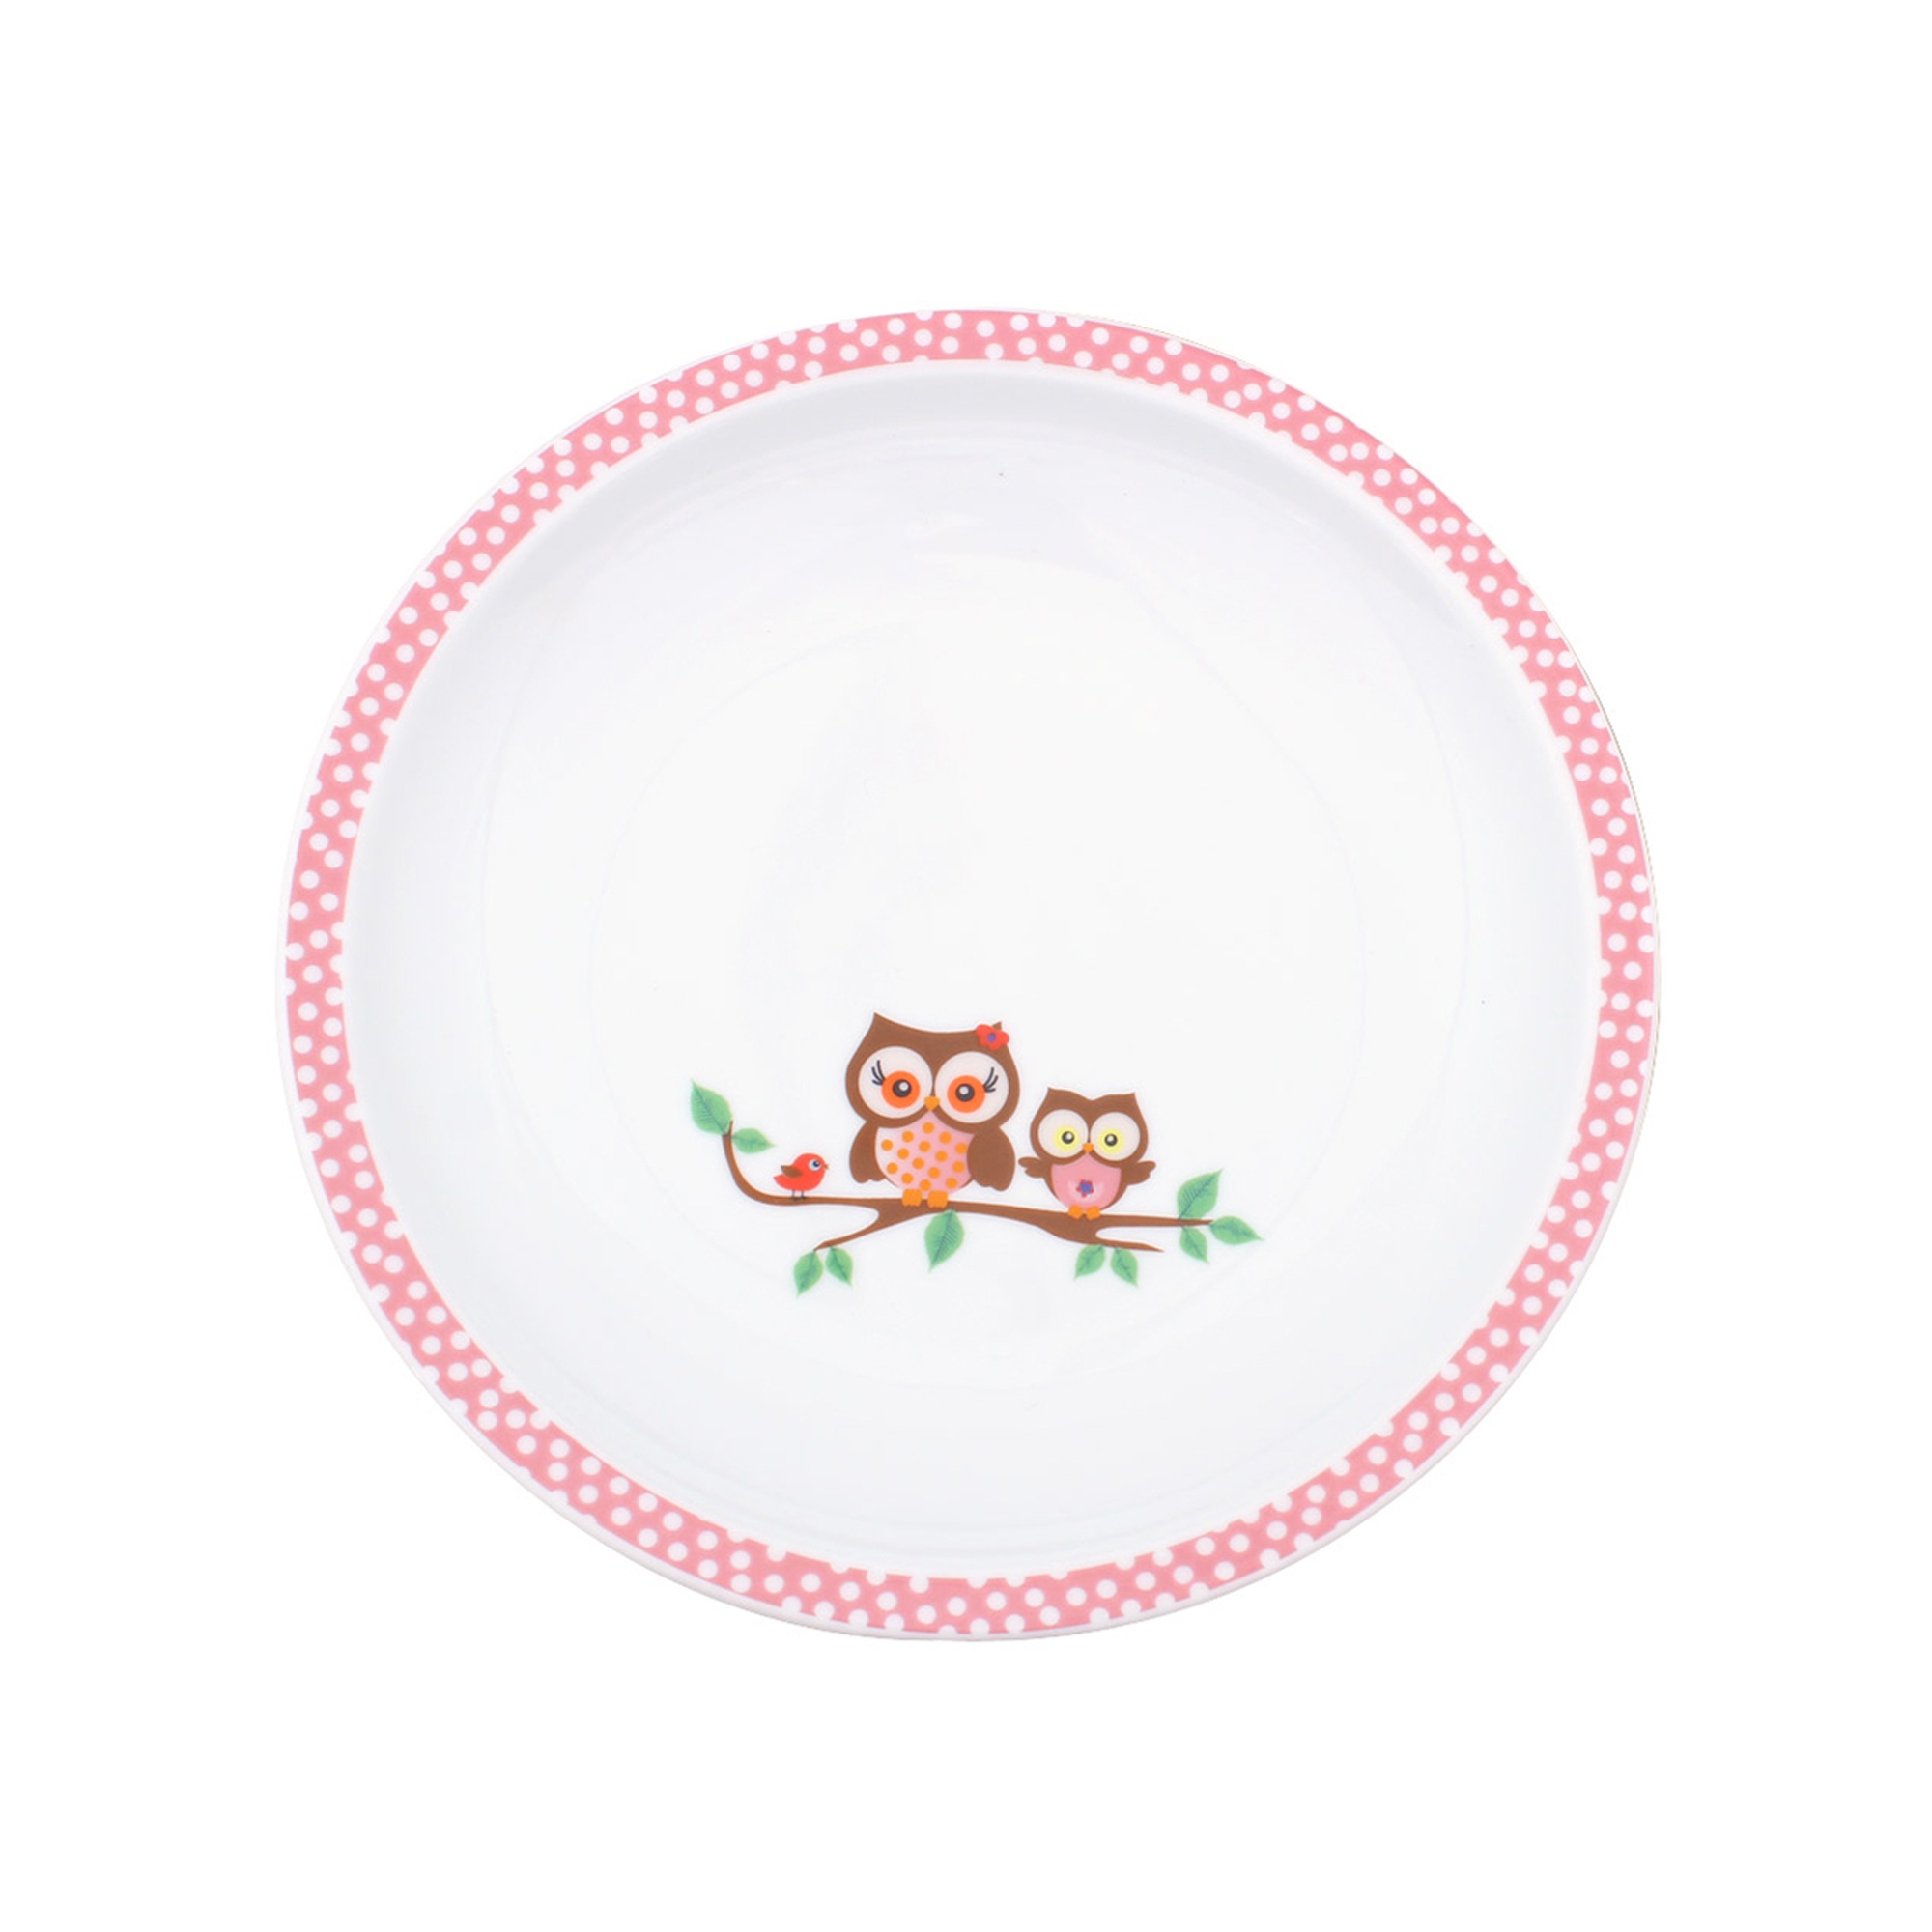 Children's tableware | Erna & Emilia | Plate flat 20cm